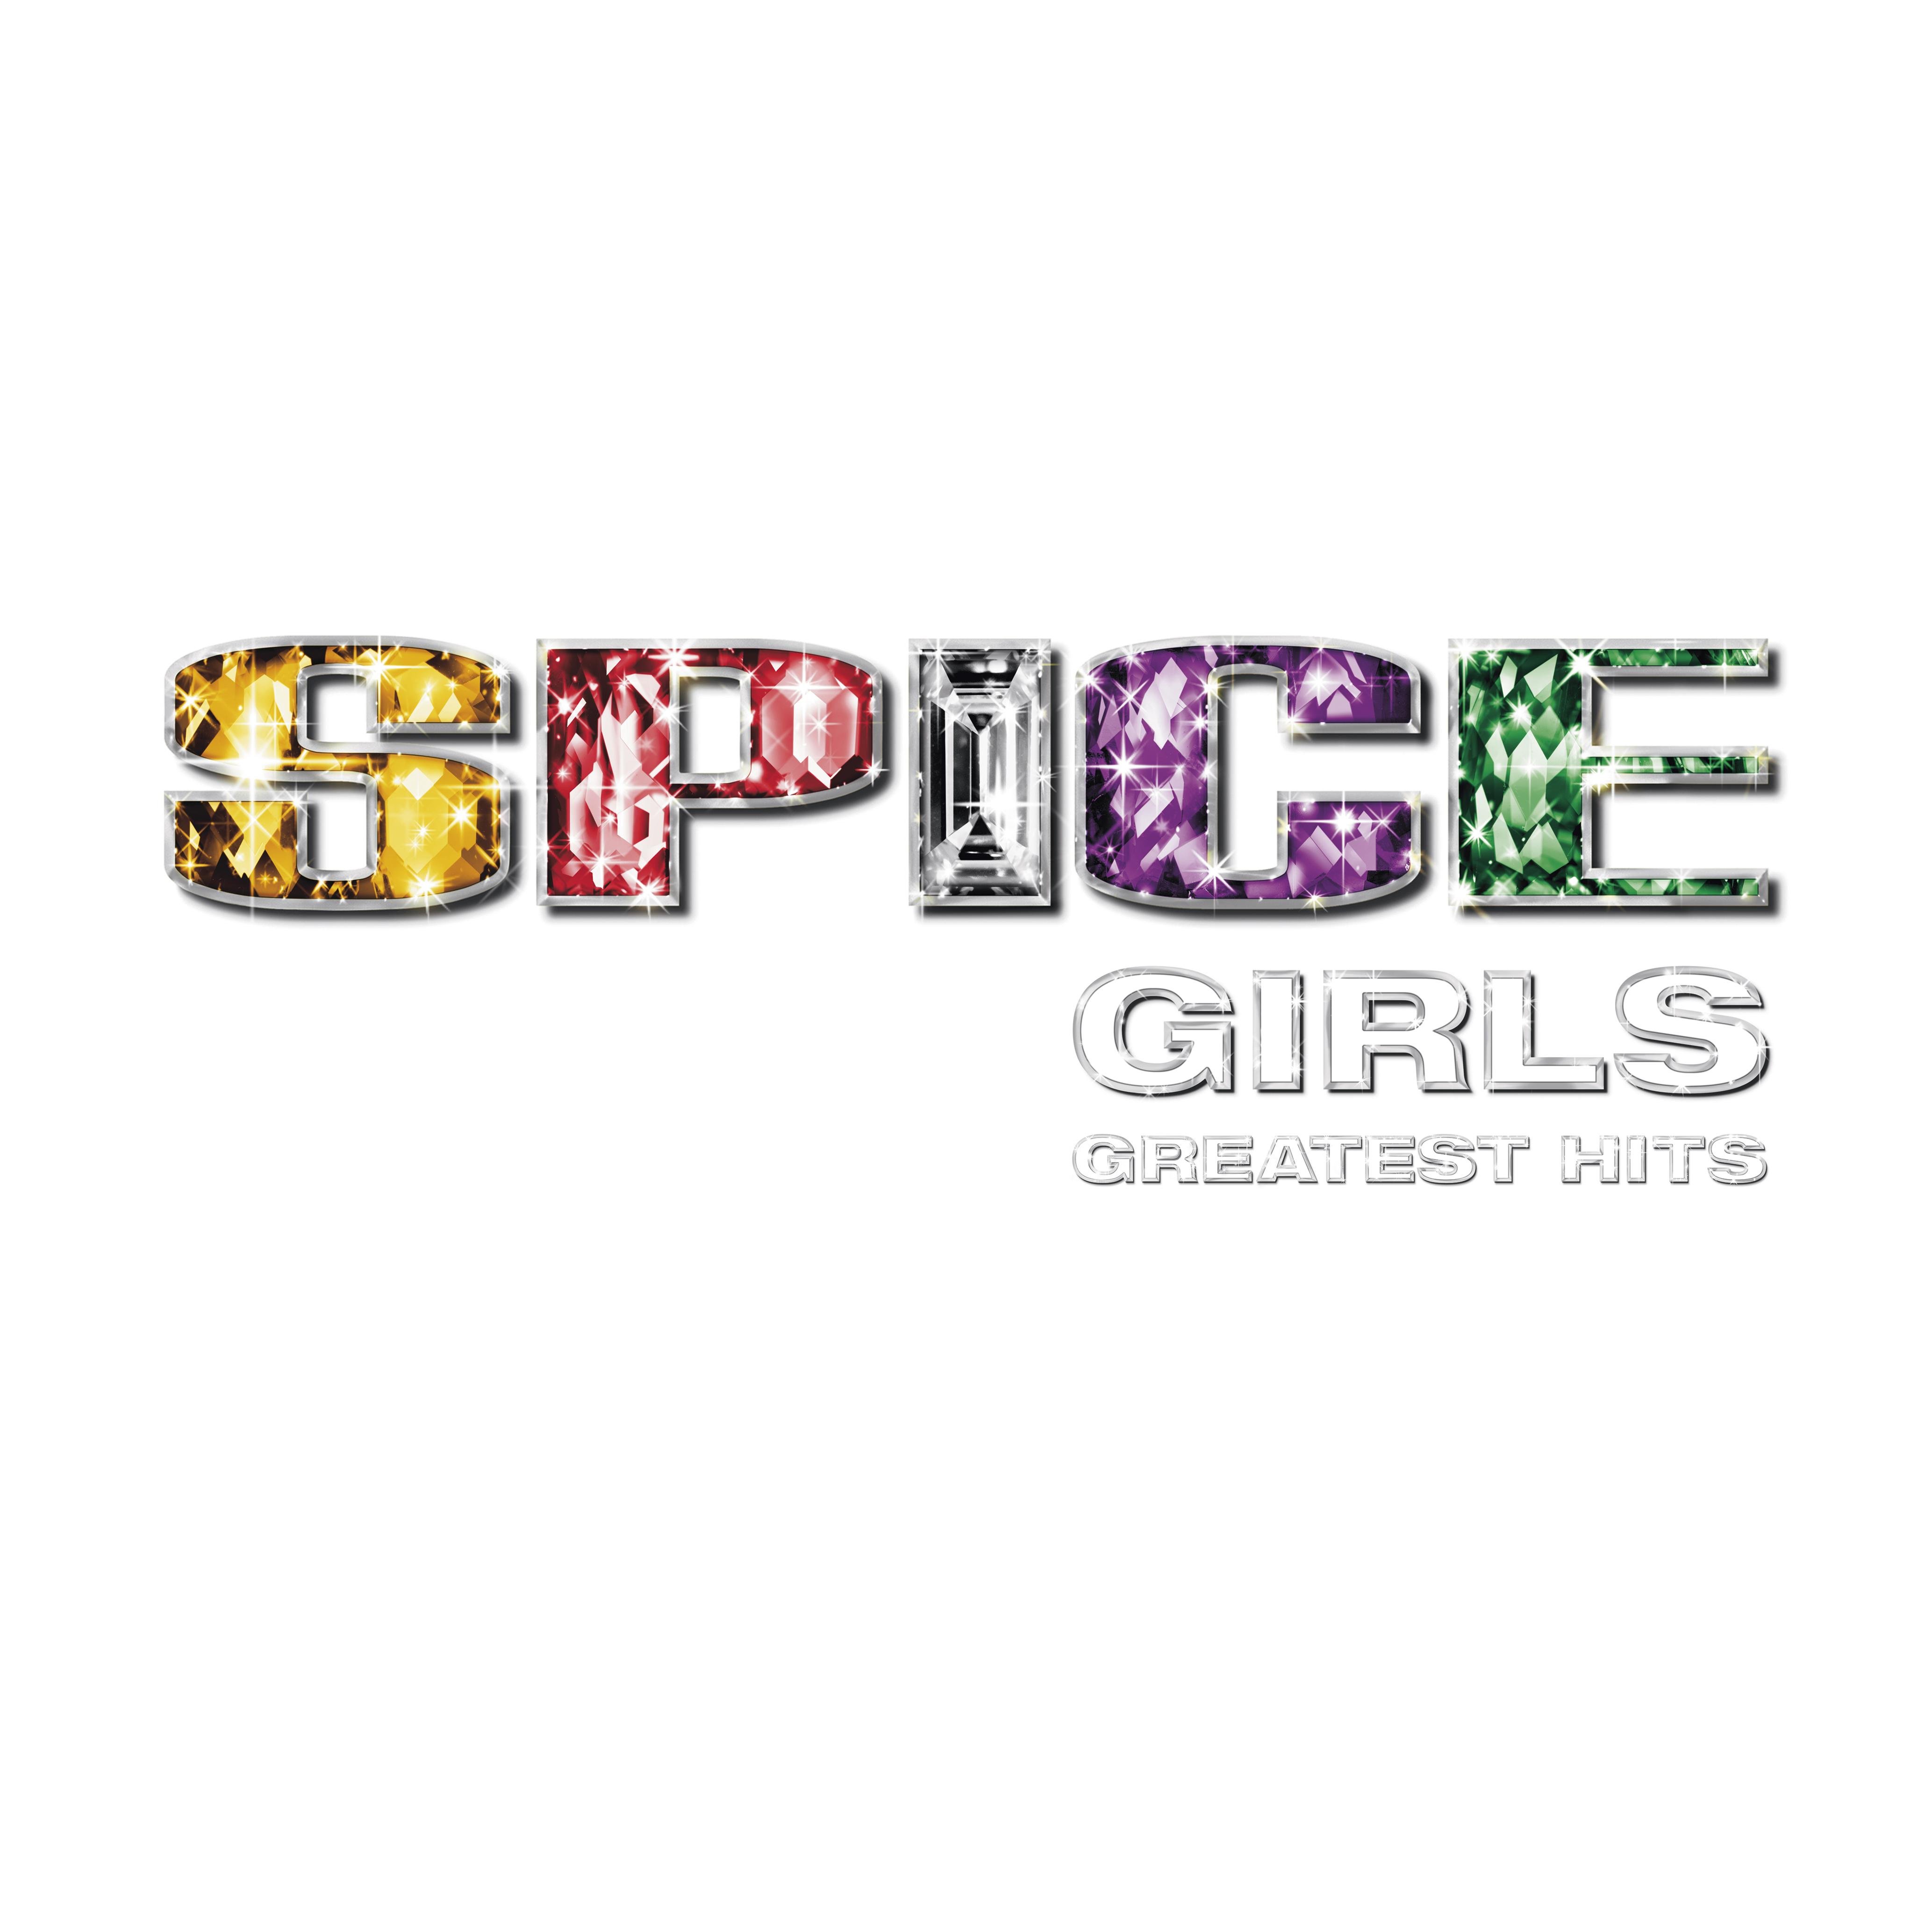 Spice Girls Spice Girls Greatest Hits Artwork 1 Of 6 Lastfm 